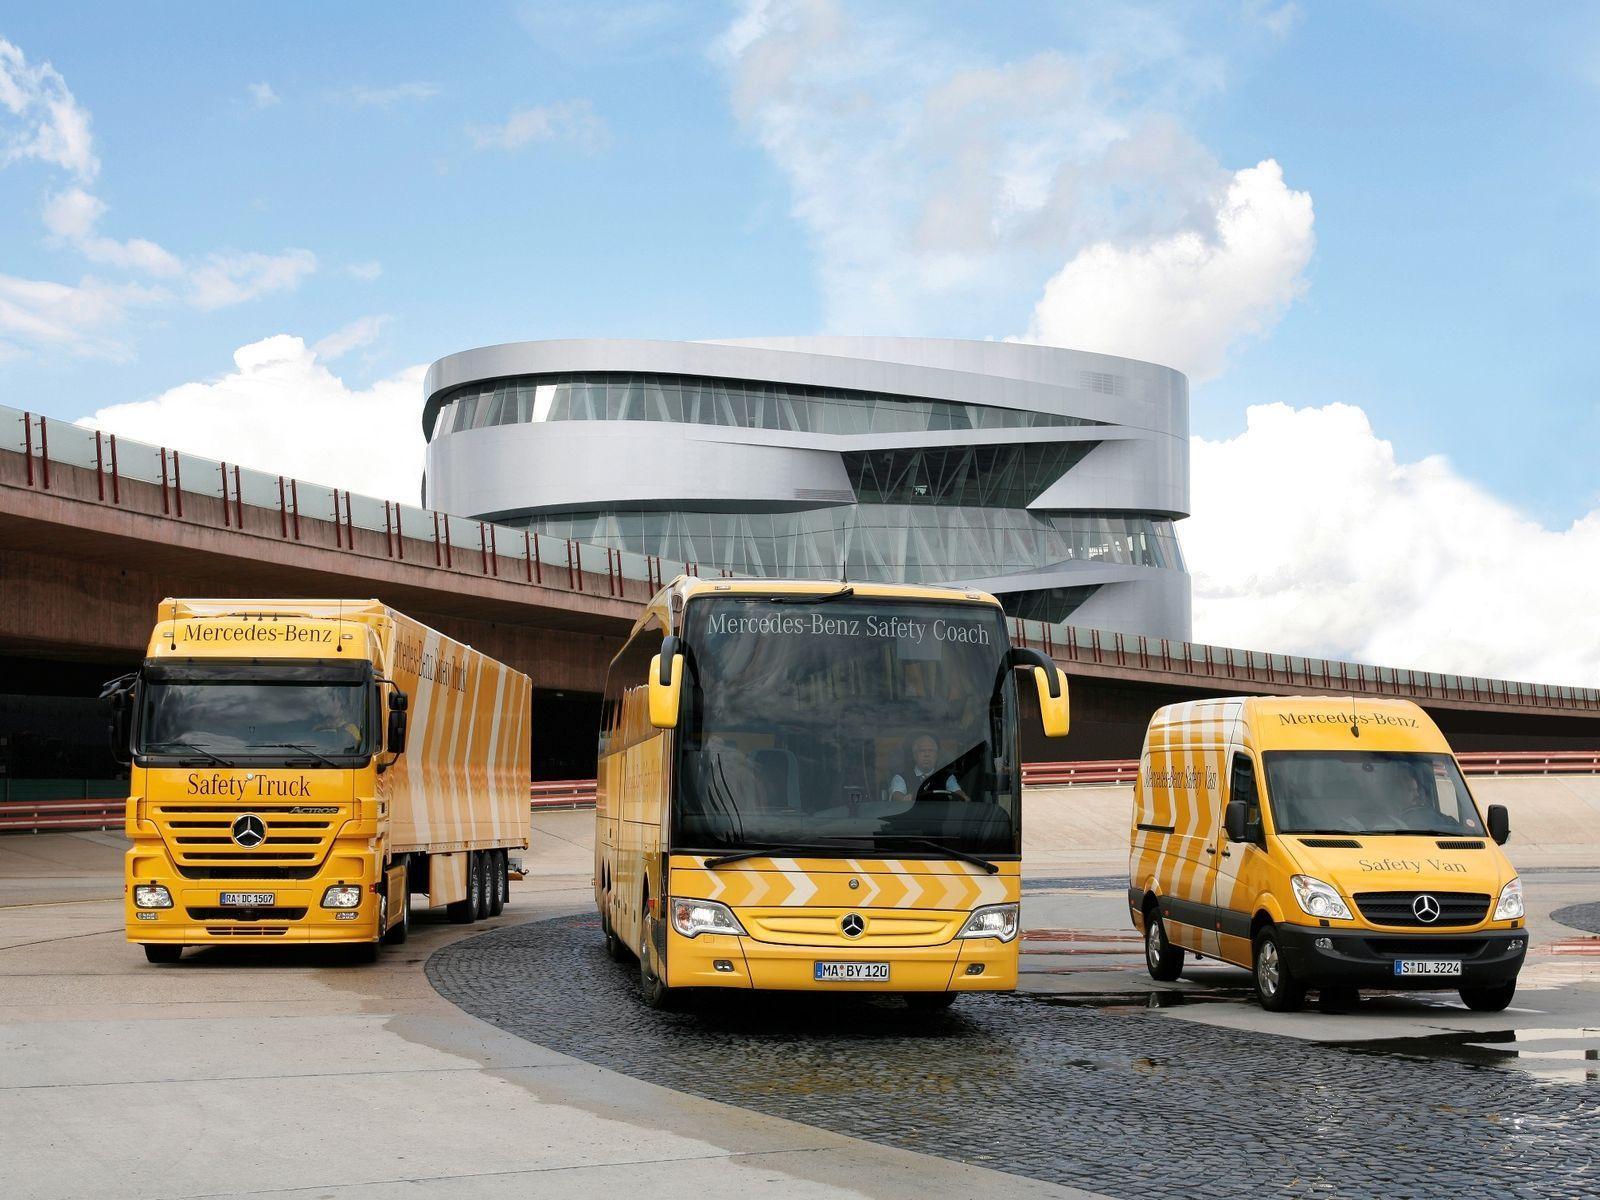 Download Wallpaper mercedes bus truck airport actros, 1600x1200